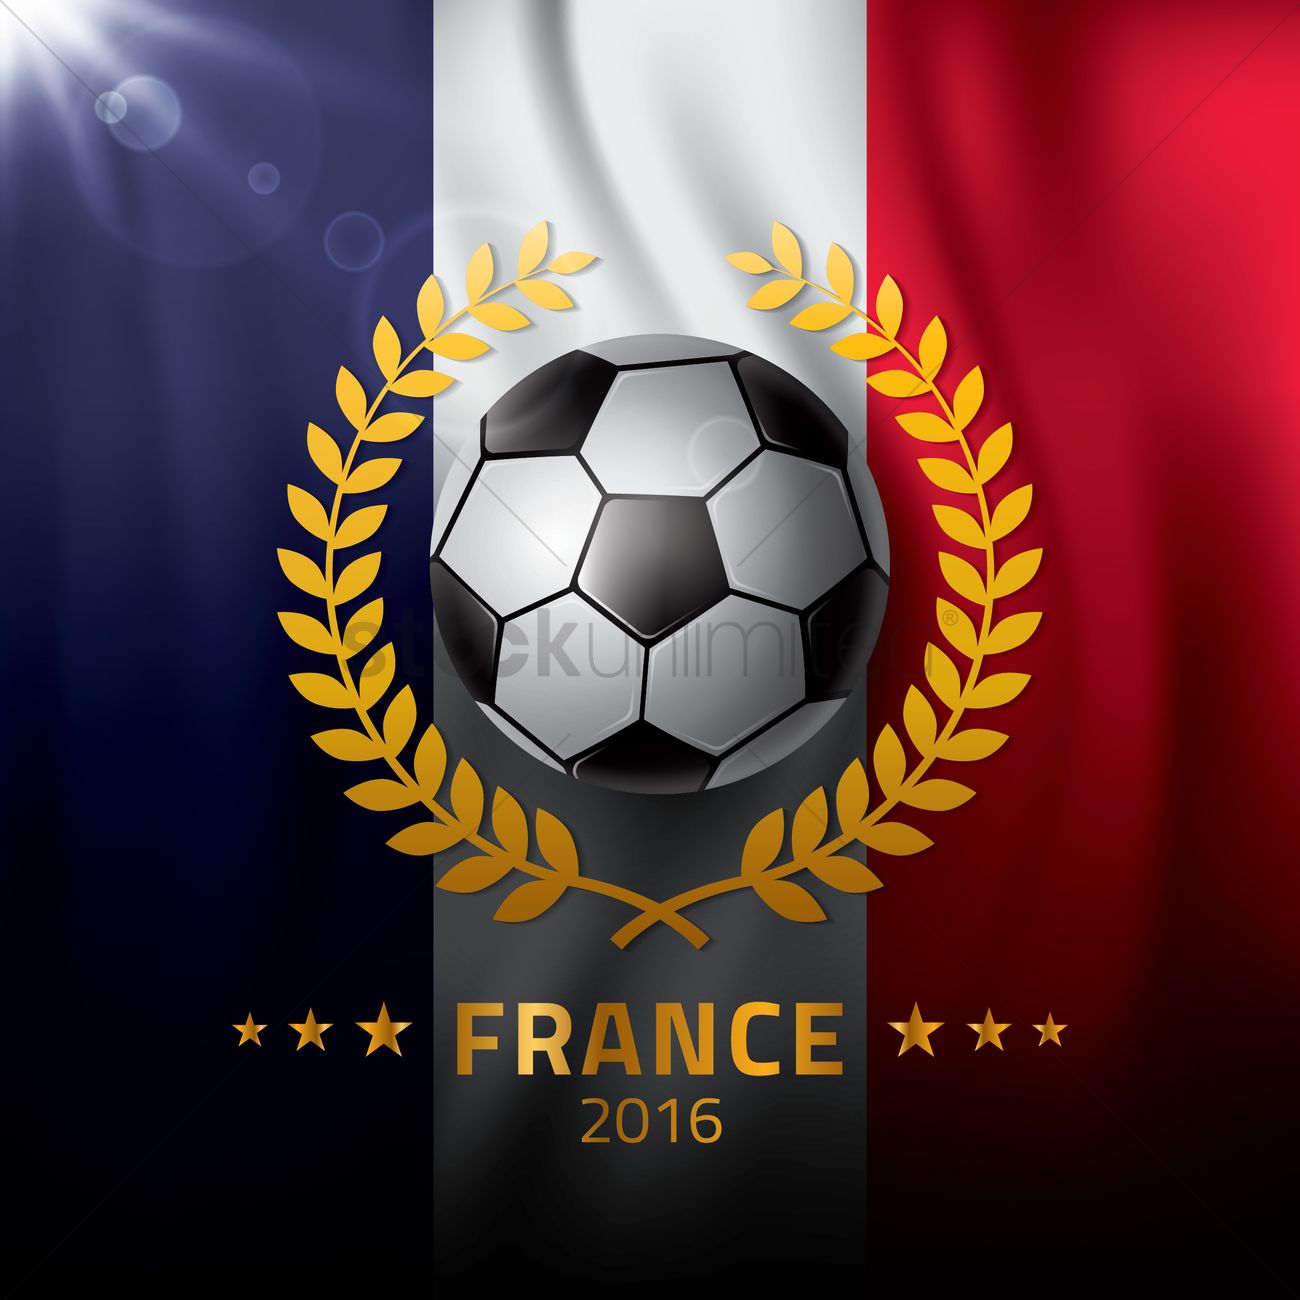 France soccer wallpaper Vector Image   1816812 StockUnlimited